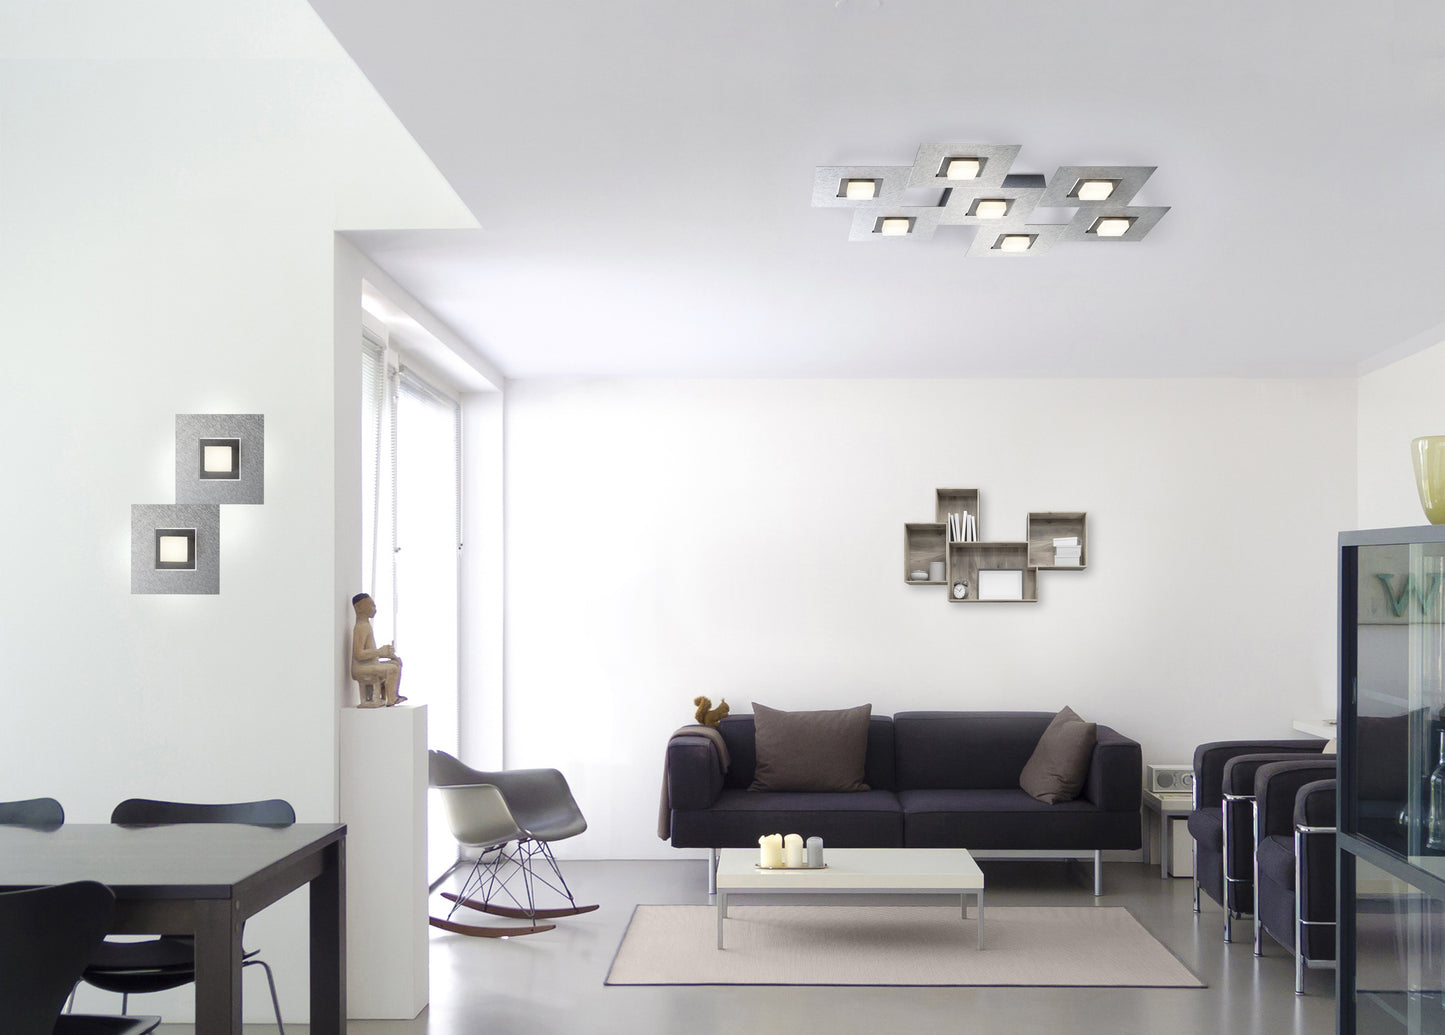 Grossmann KARREE Pearlescent Seven Lamp Wall / Ceiling Light - Colour Frame Options